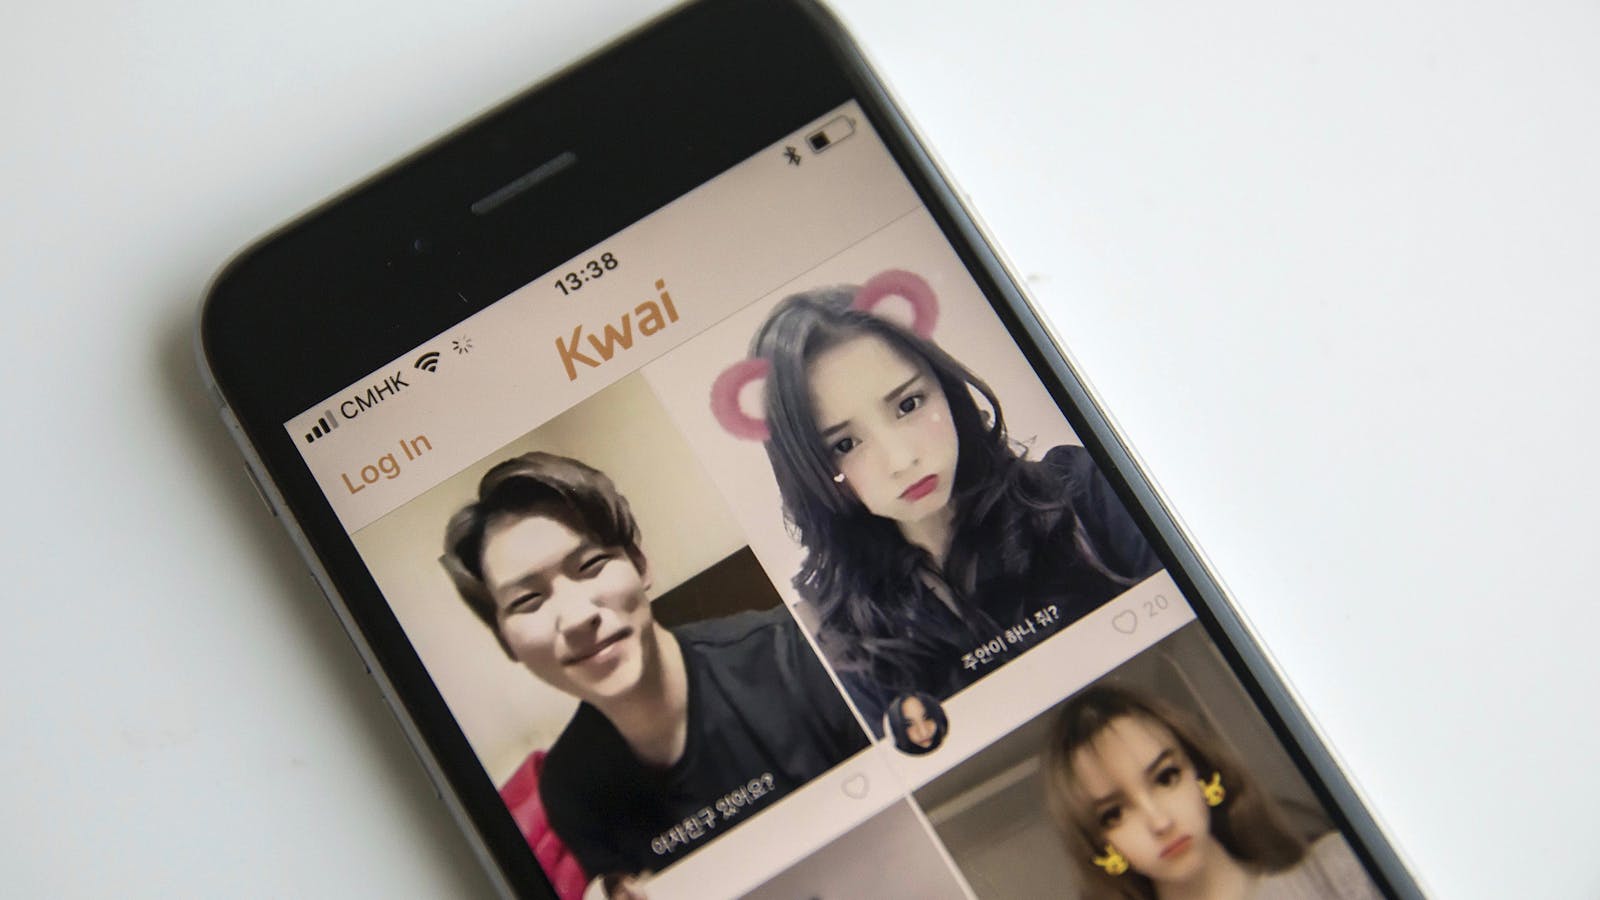 Kuaishou's app on a smartphone. Photo by Bloomberg